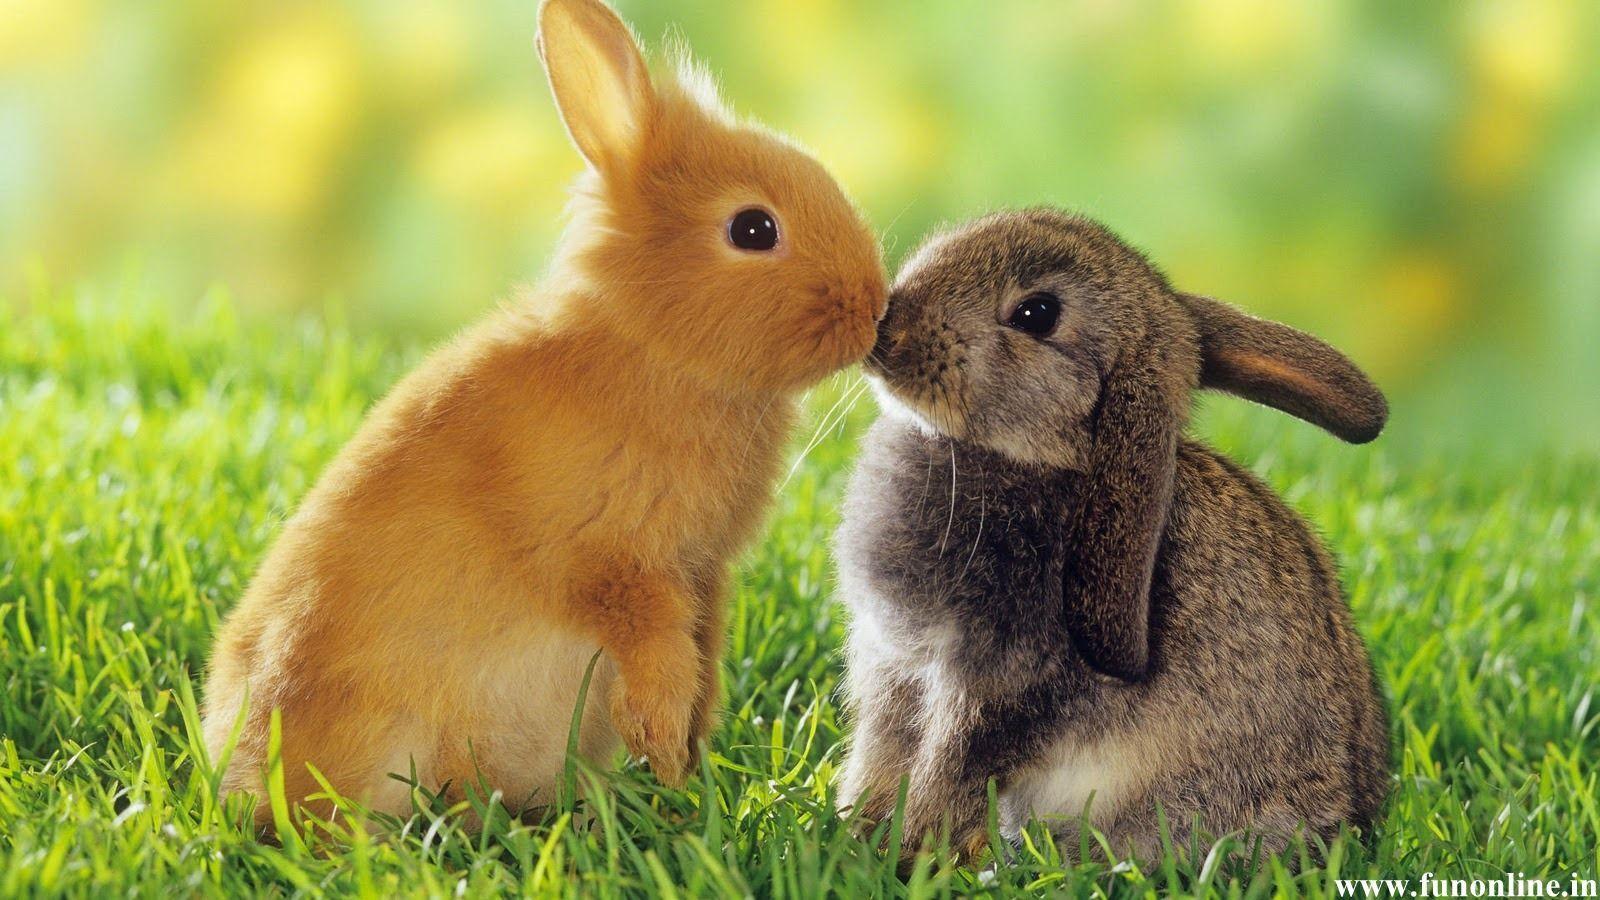 Rabbit Wallpaper, Download Free Cute Baby Rabbits HD Wallpaper